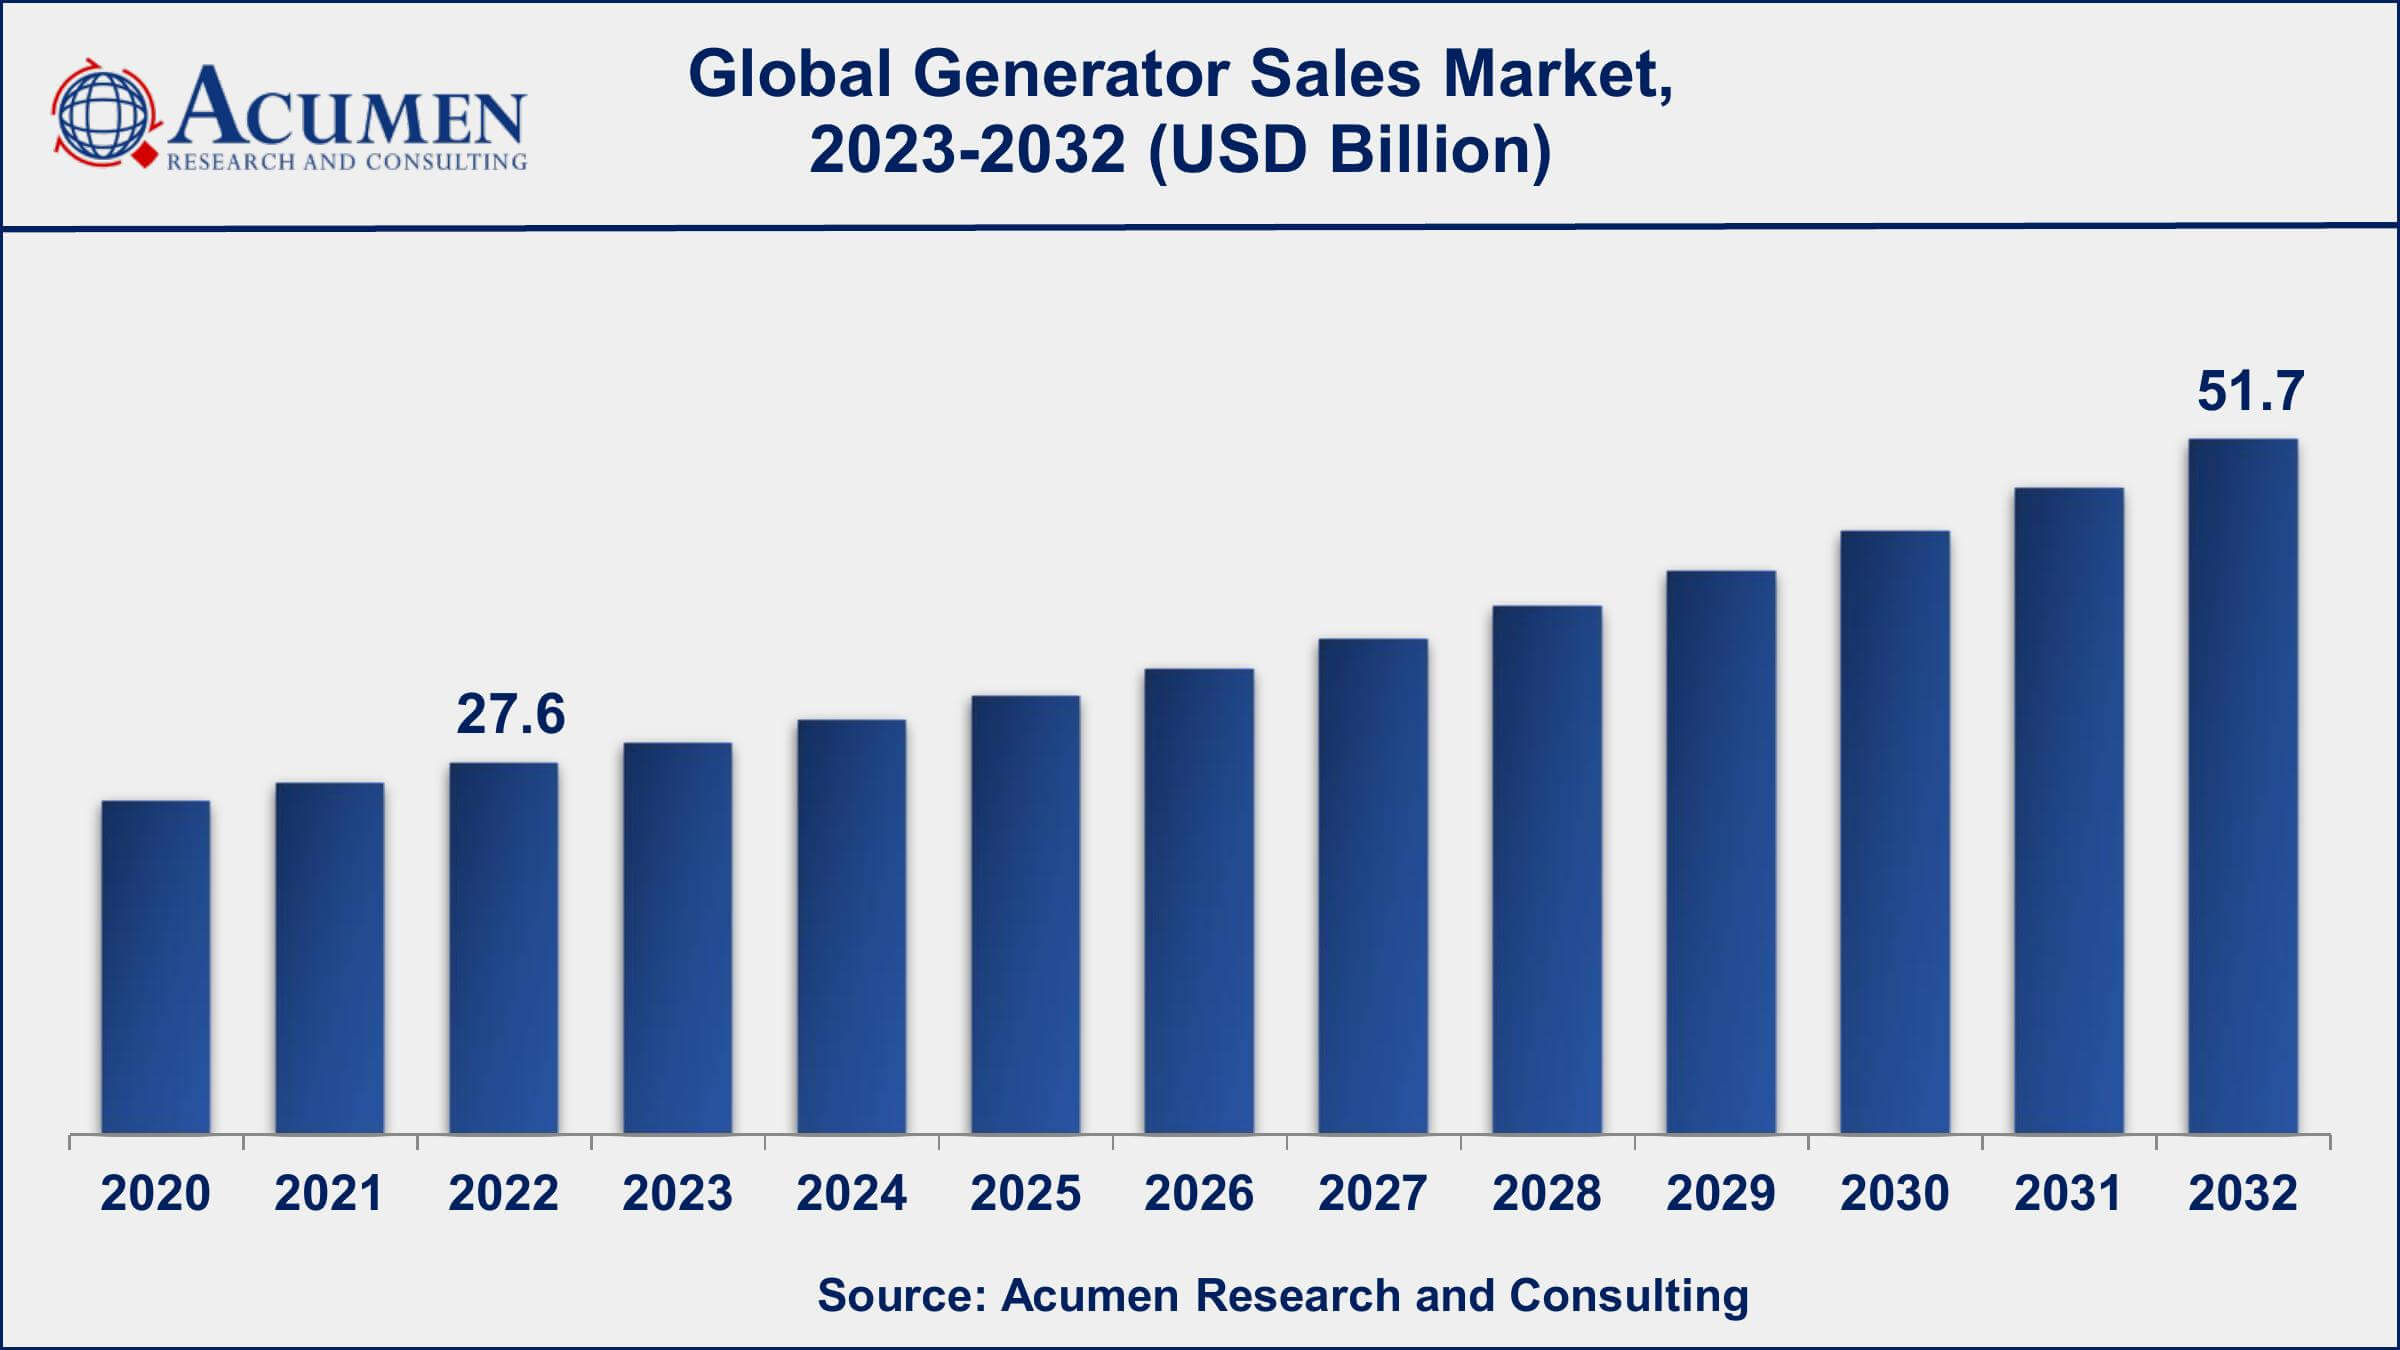 Global Generator Sales Market Dynamics